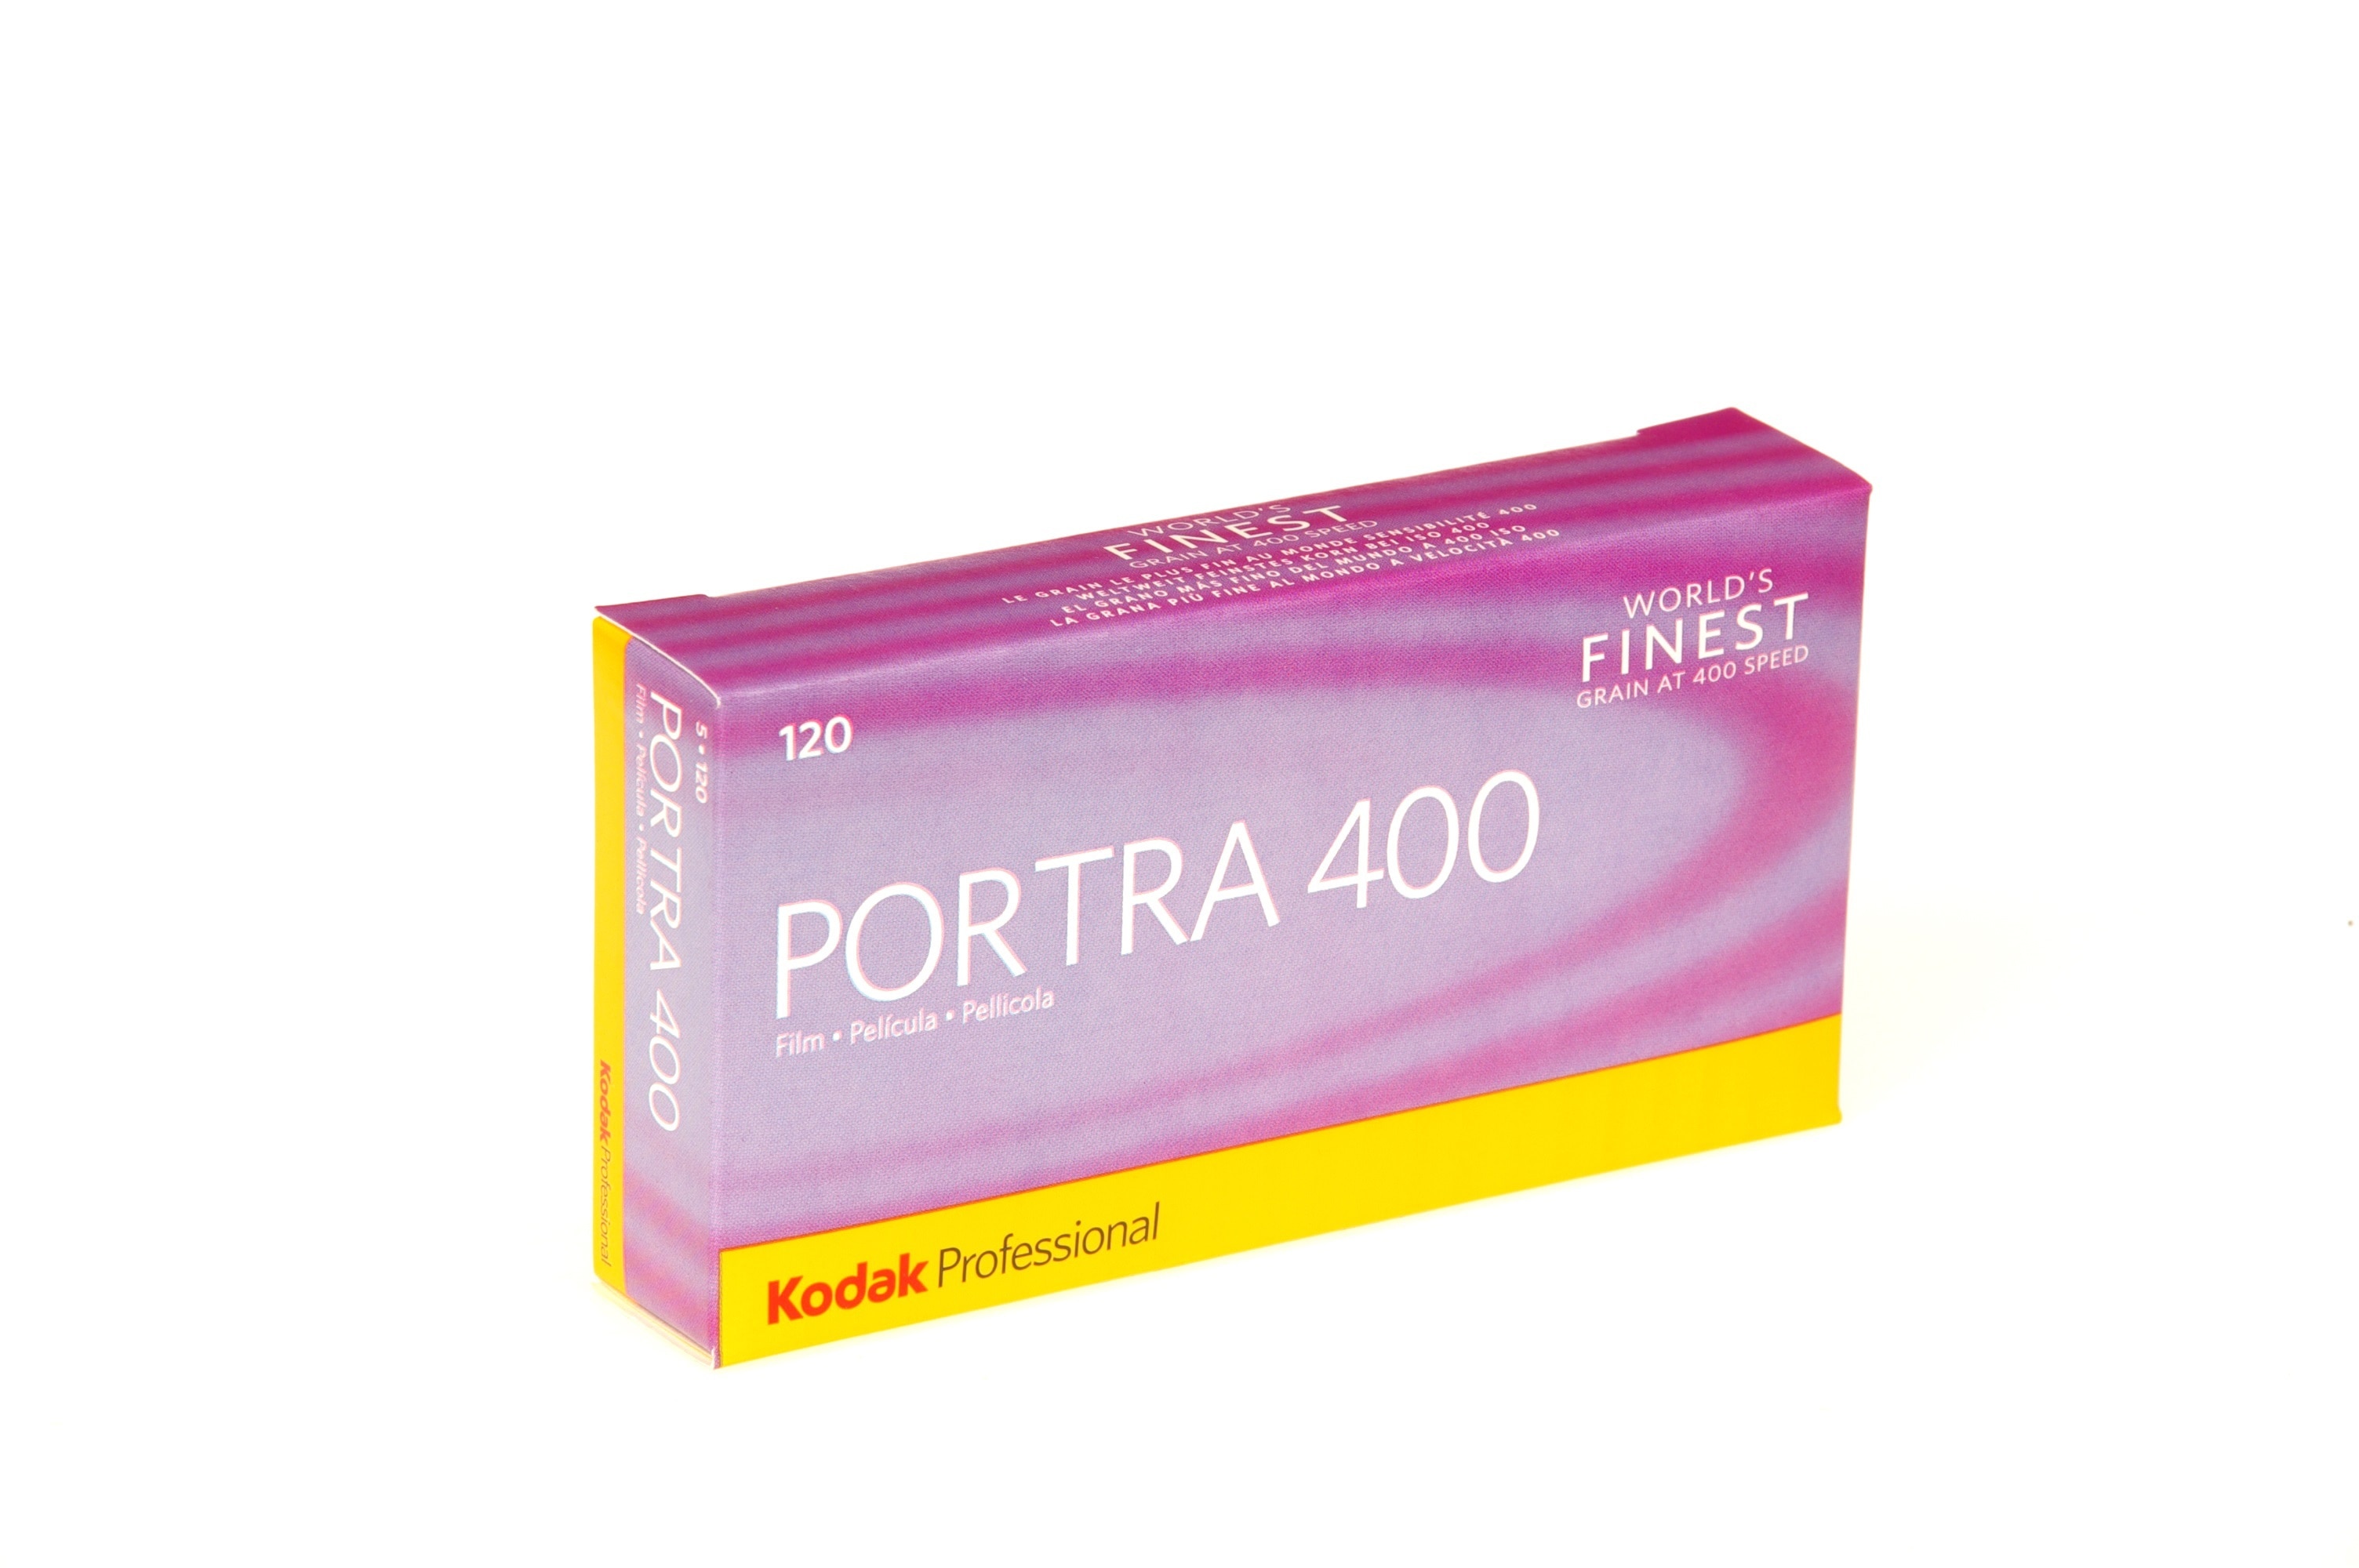 PORTRA400 120-5p KODAK PROFESSIONAL カラーネガフィルム 1箱 